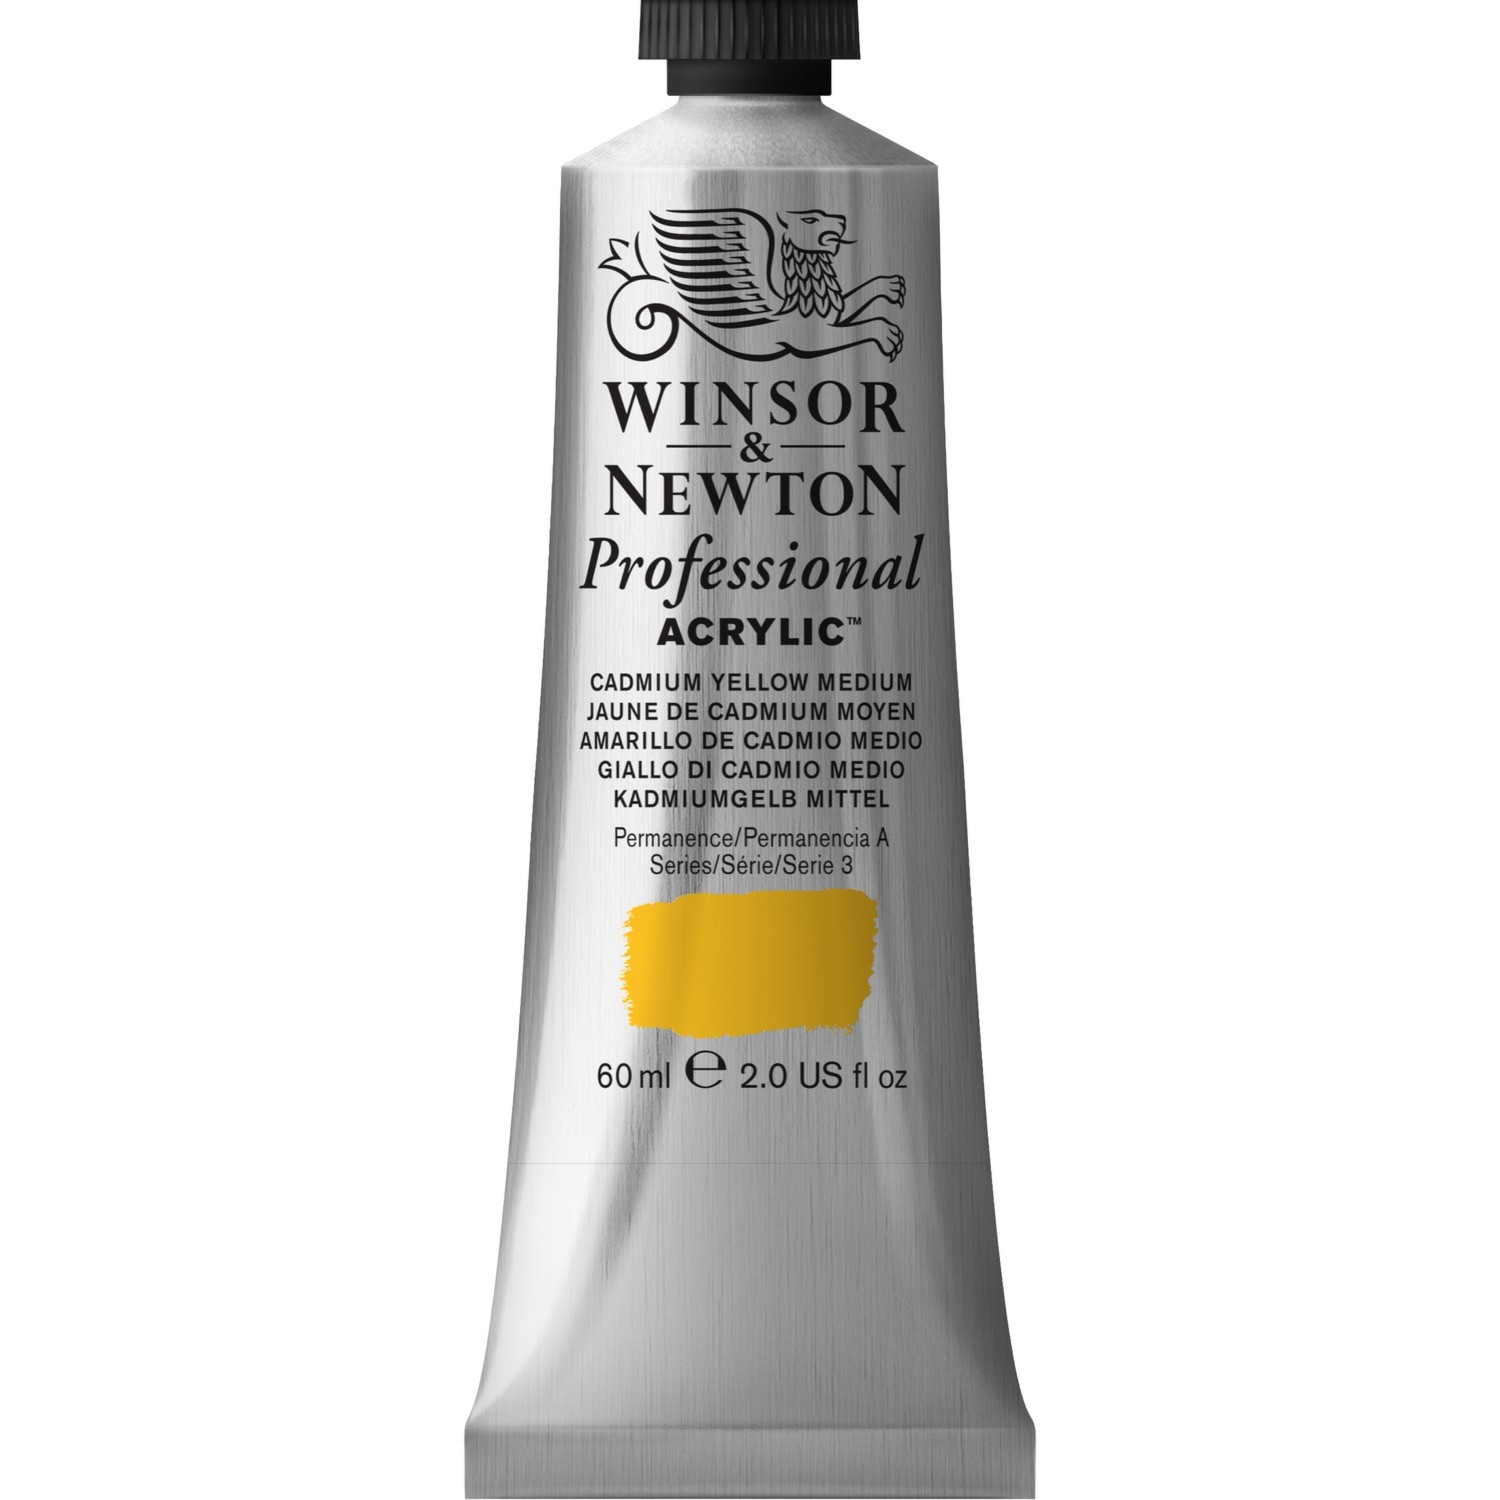 Winsor and Newton 60ml Professional Acrylic Paint - Yellow Medium Image 1